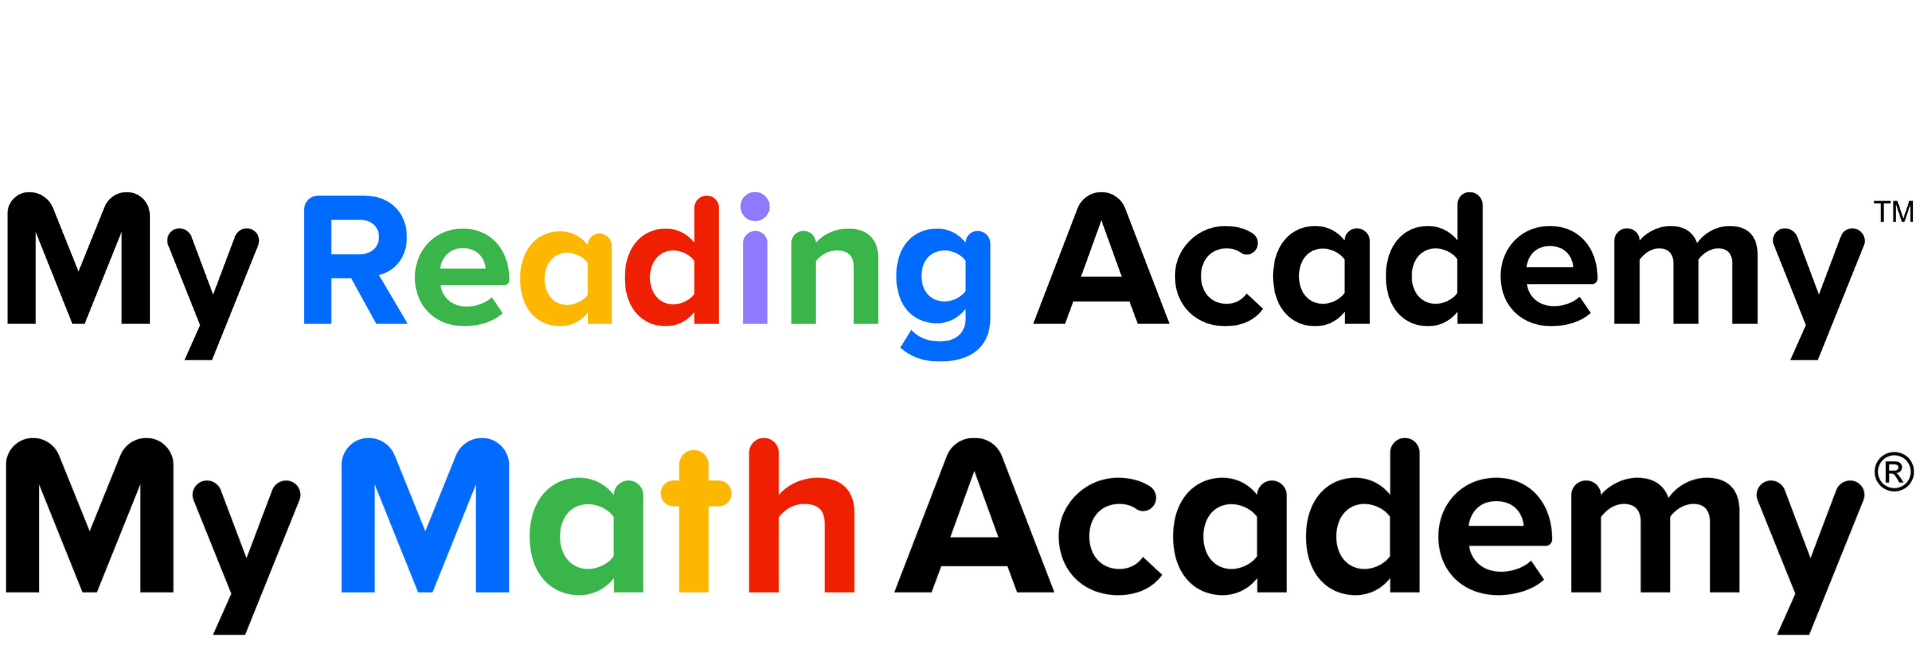 My Reading Academy My Math Academy